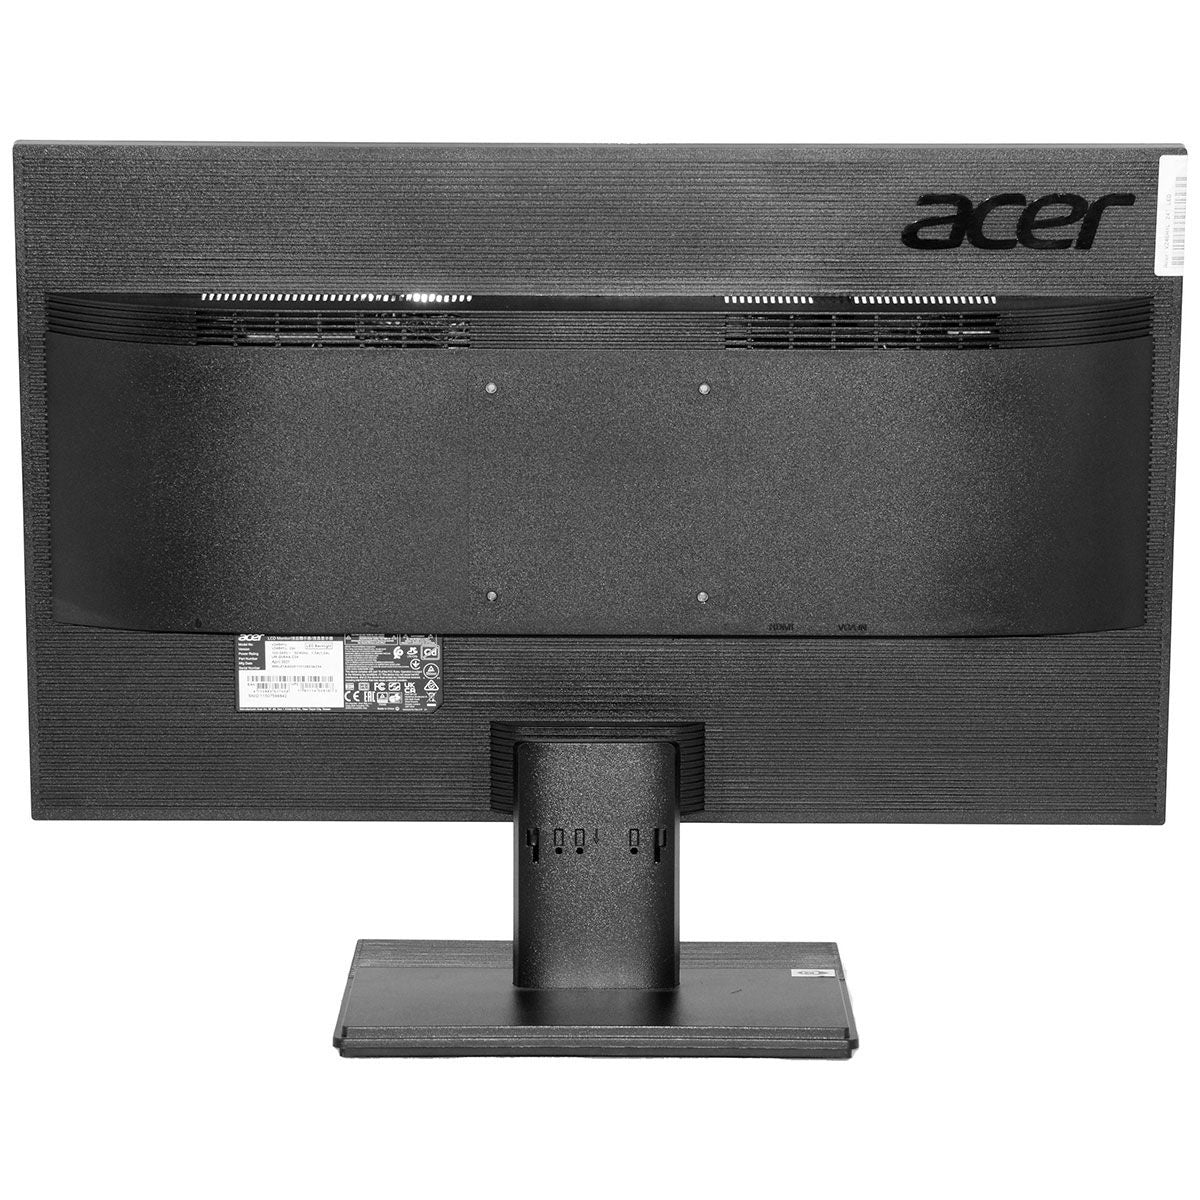 Acer V246HYL (23.8-in) V6 LED Backlit Full HD LCD Monitor (1920 x 1080) - Black Digital Displays - Monitors Acer    - Simple Cell Bulk Wholesale Pricing - USA Seller